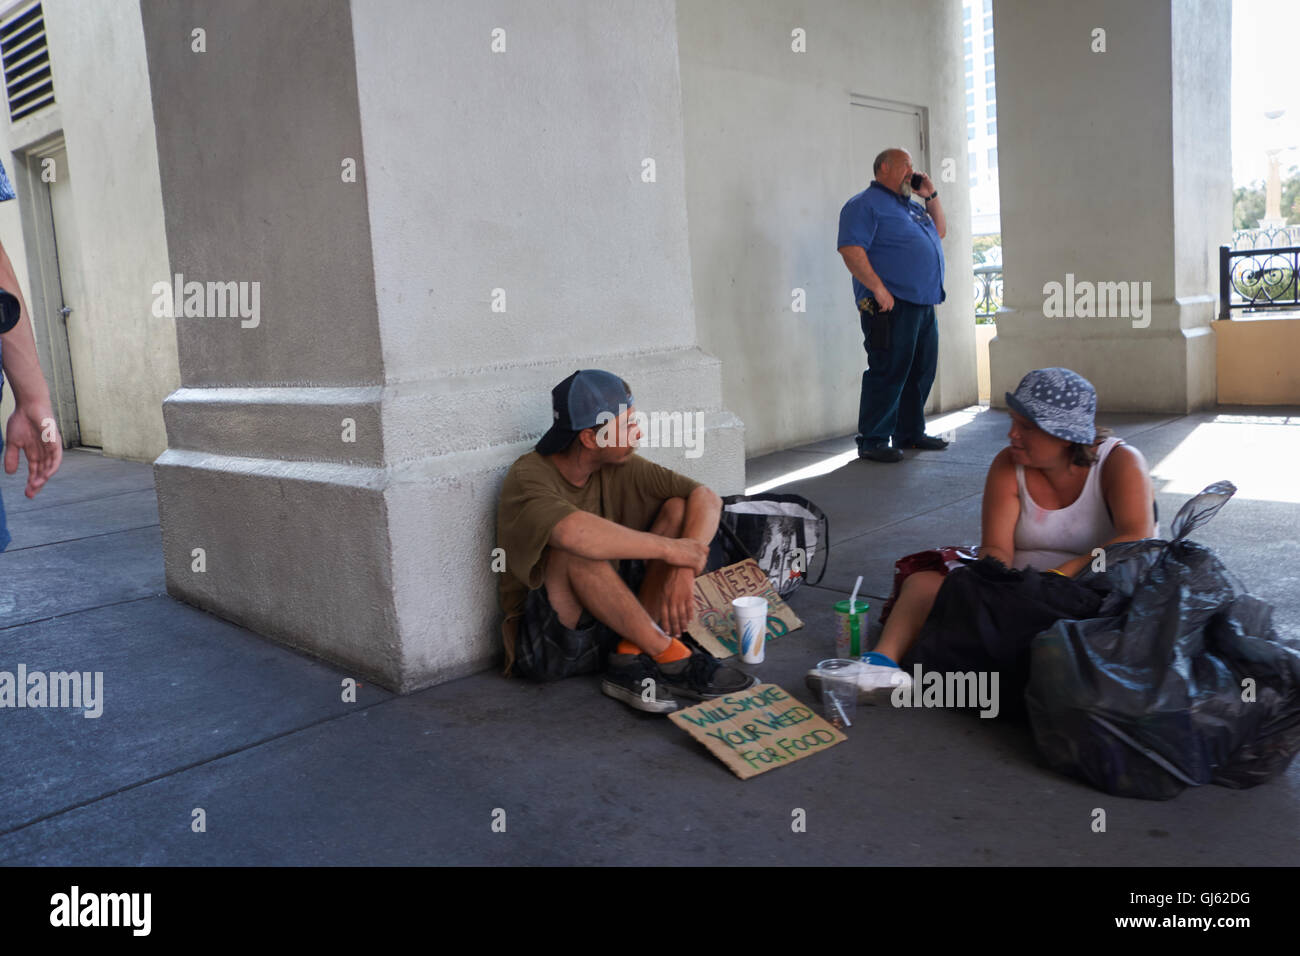 Two people begging. Las Vegas. Nevada USA Stock Photo